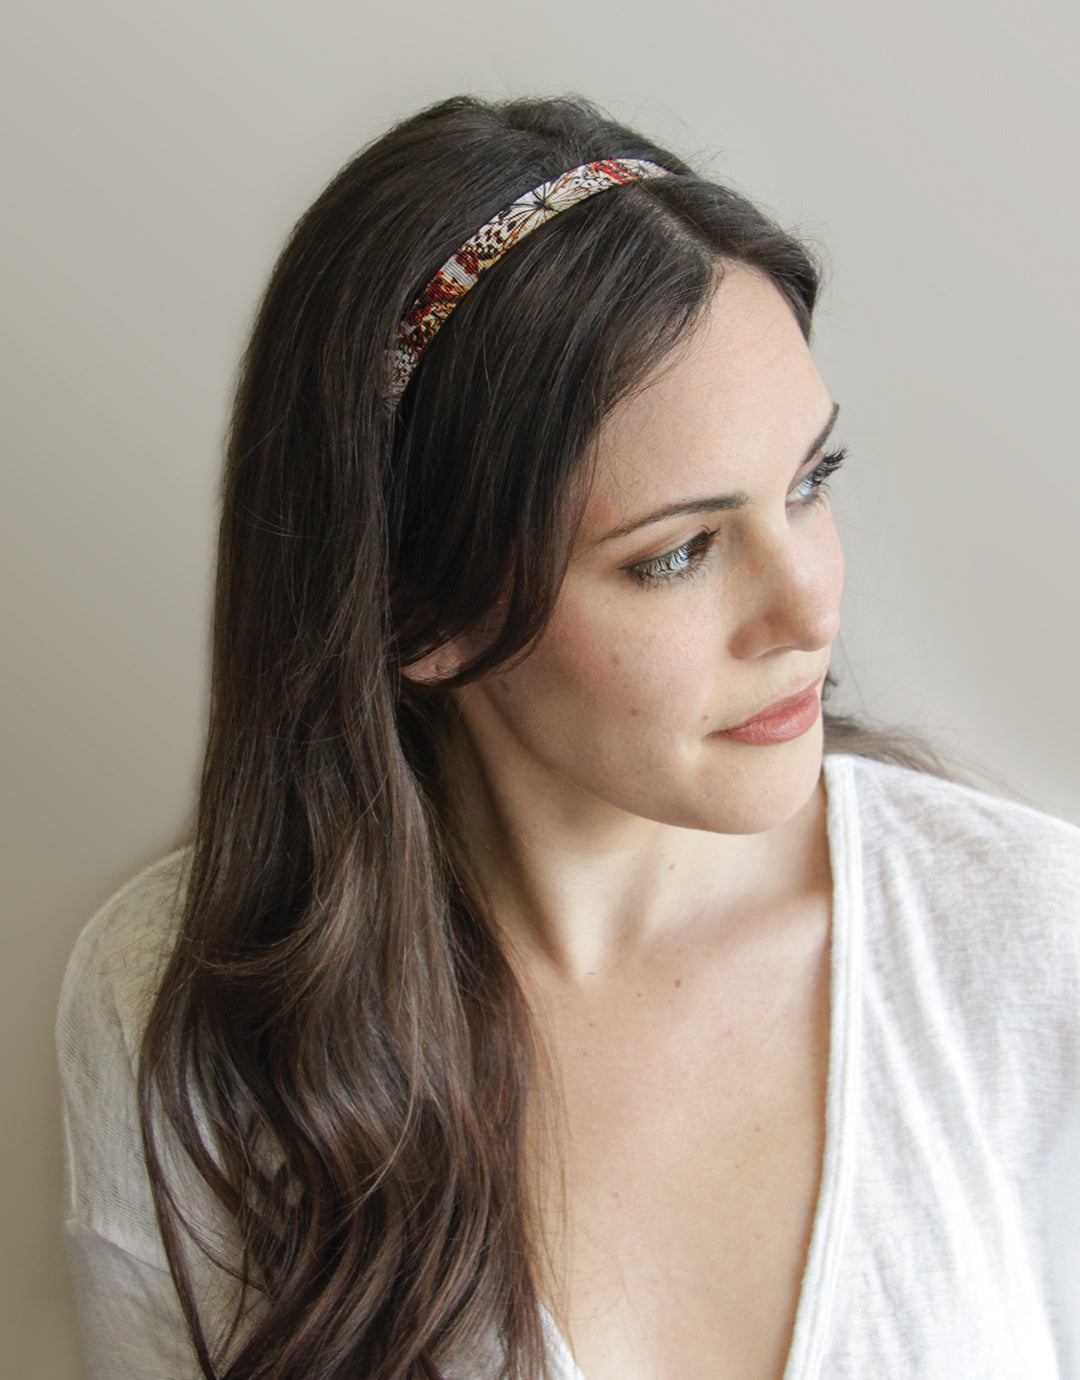 BANDED Women’s Premium Headbands + Hair Accessories - Winter Butterfly - Skinny Headband